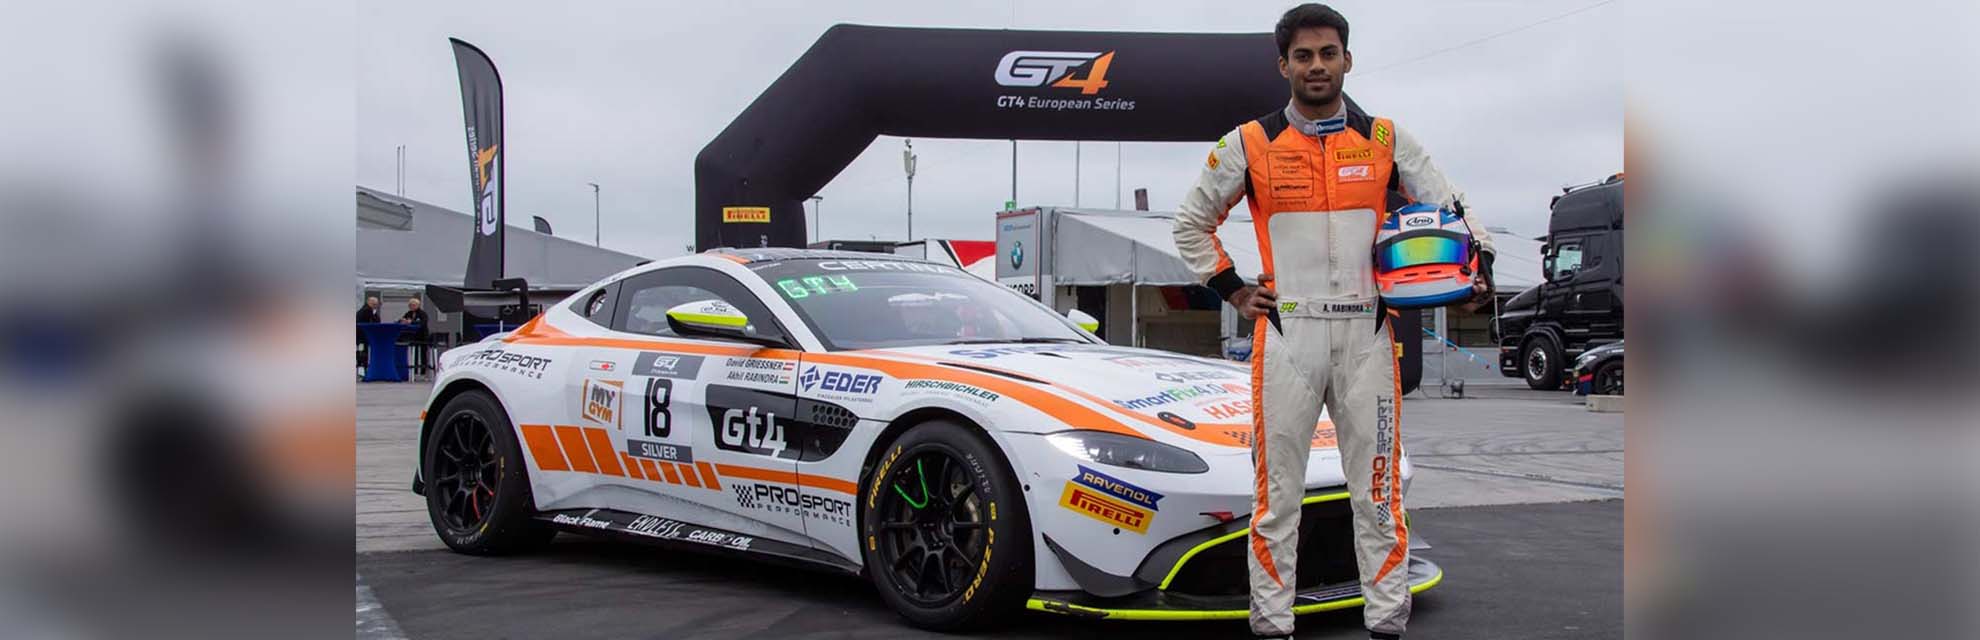 Du karting aux GT4 European Series : le pilote indien Akhil Rabindra roule vers la gloire